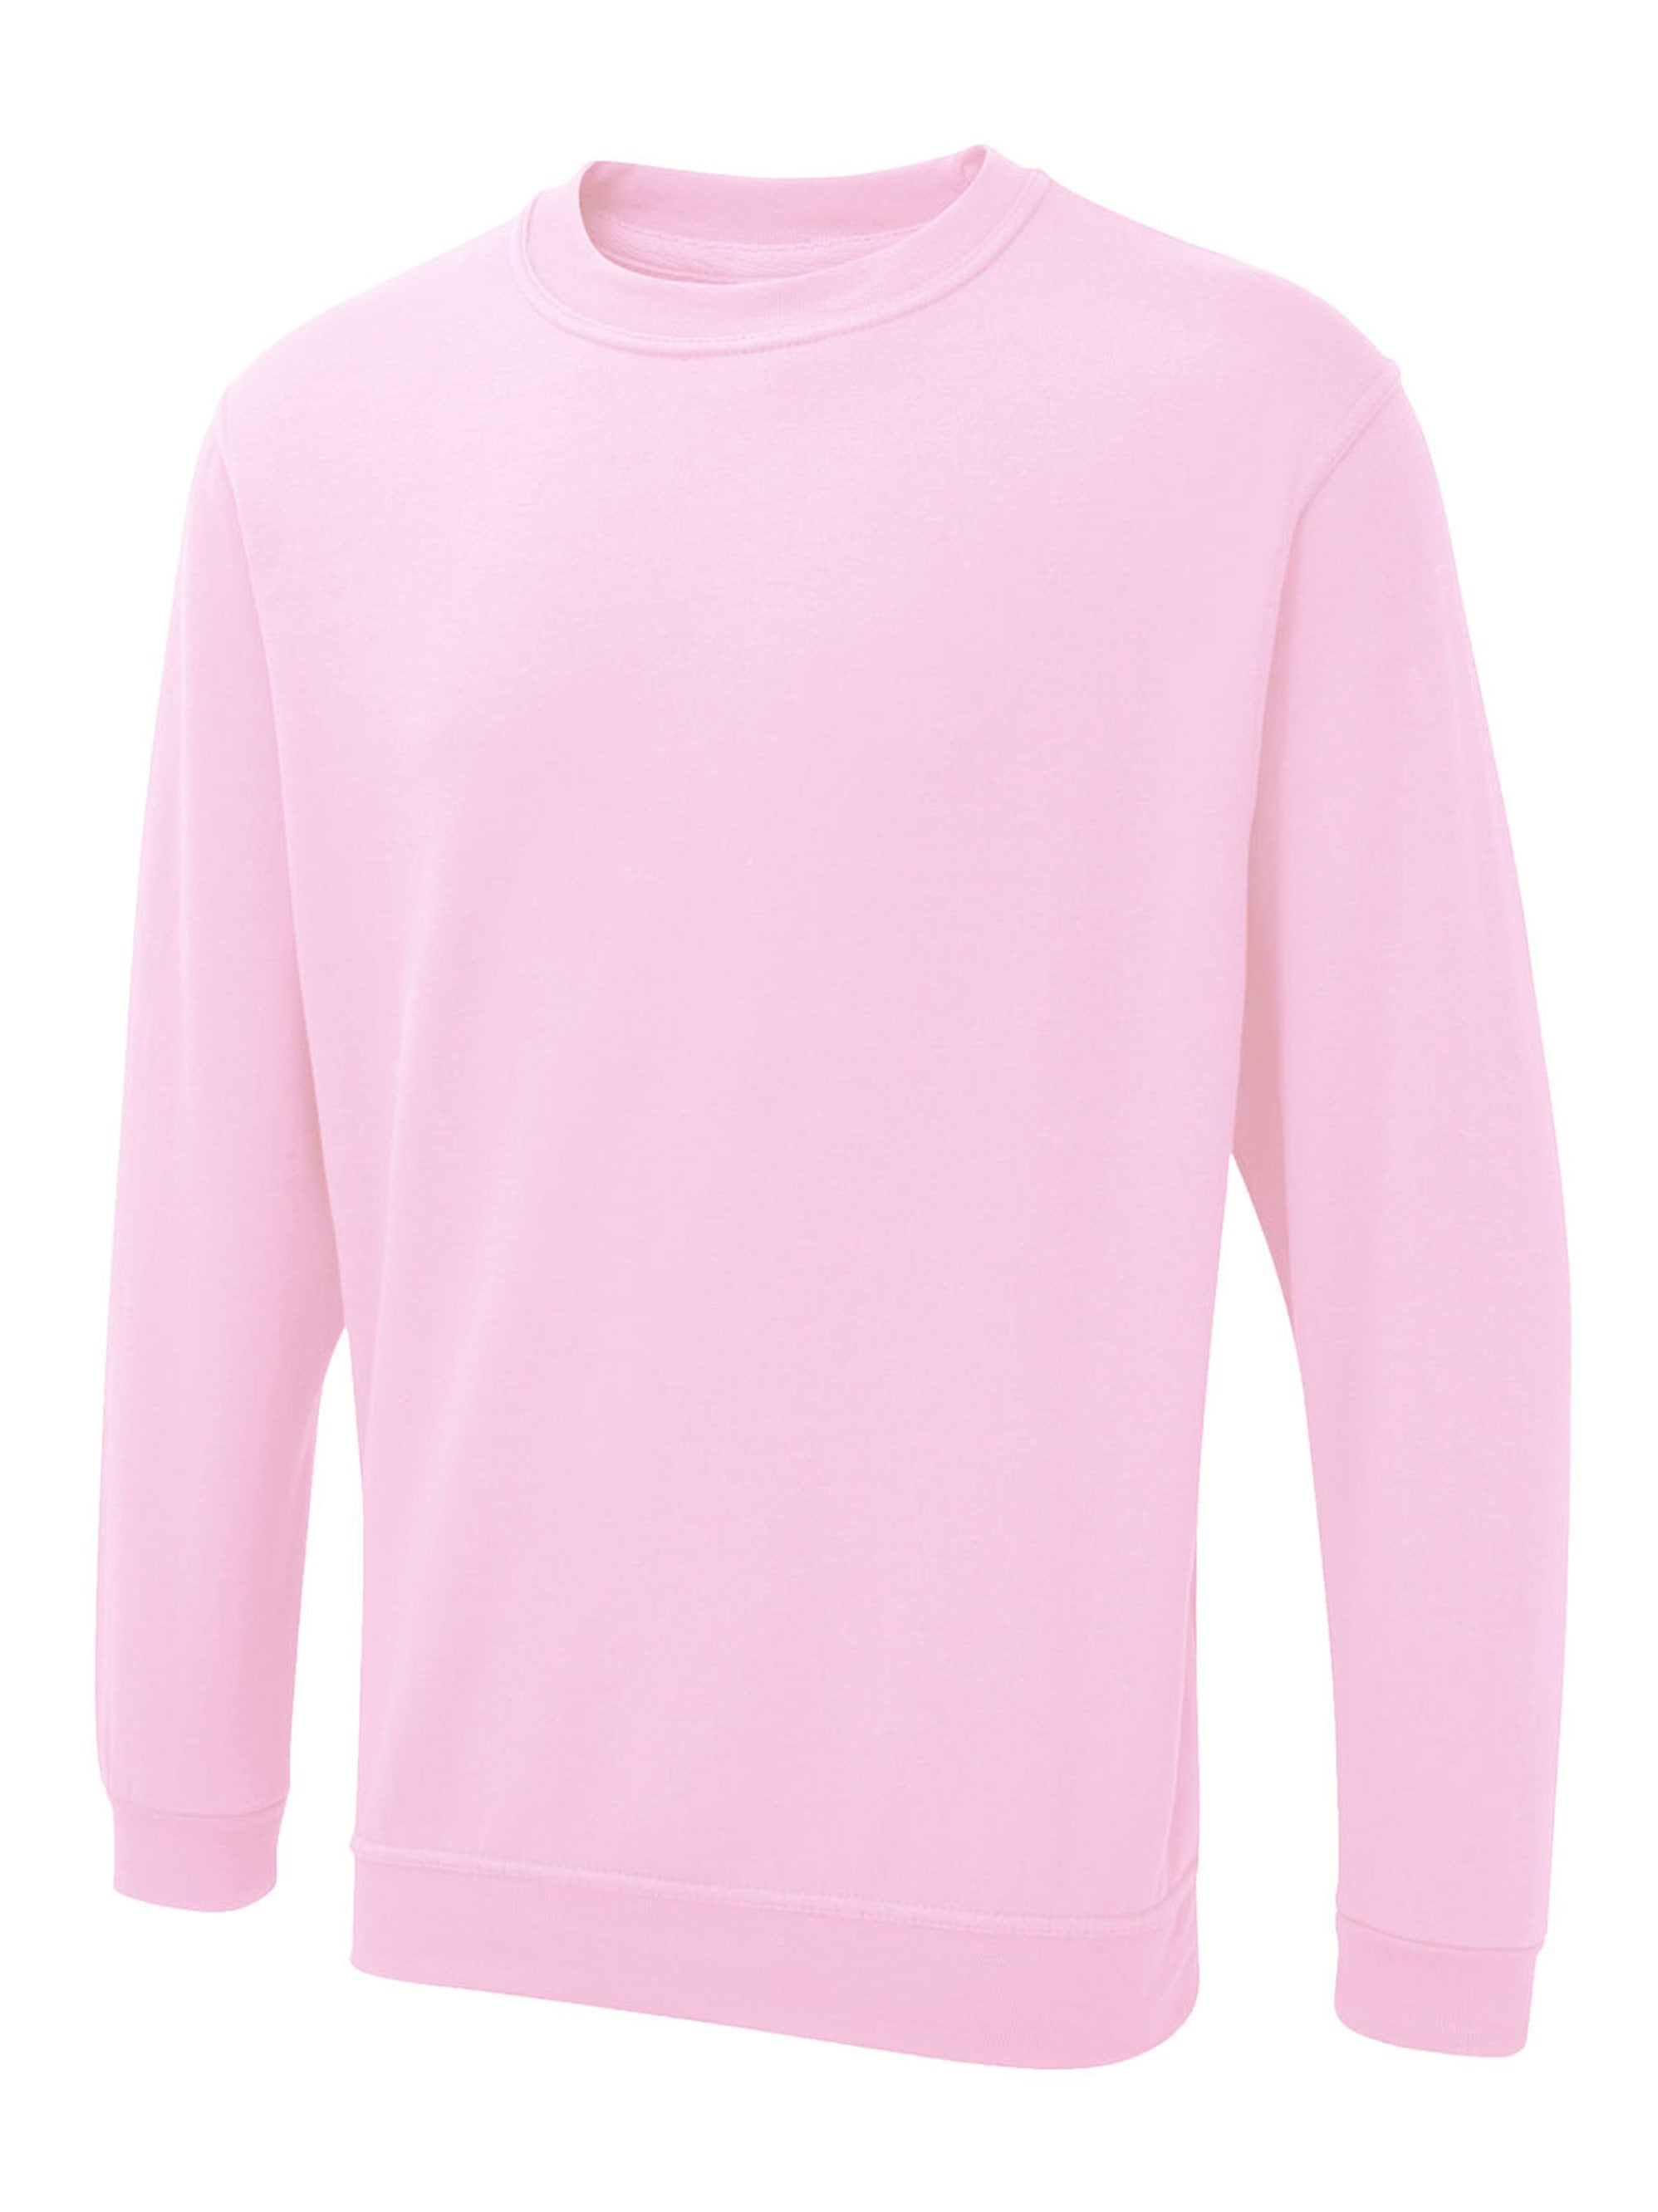 Uneek The UX Sweatshirt - ux3 (Pink)